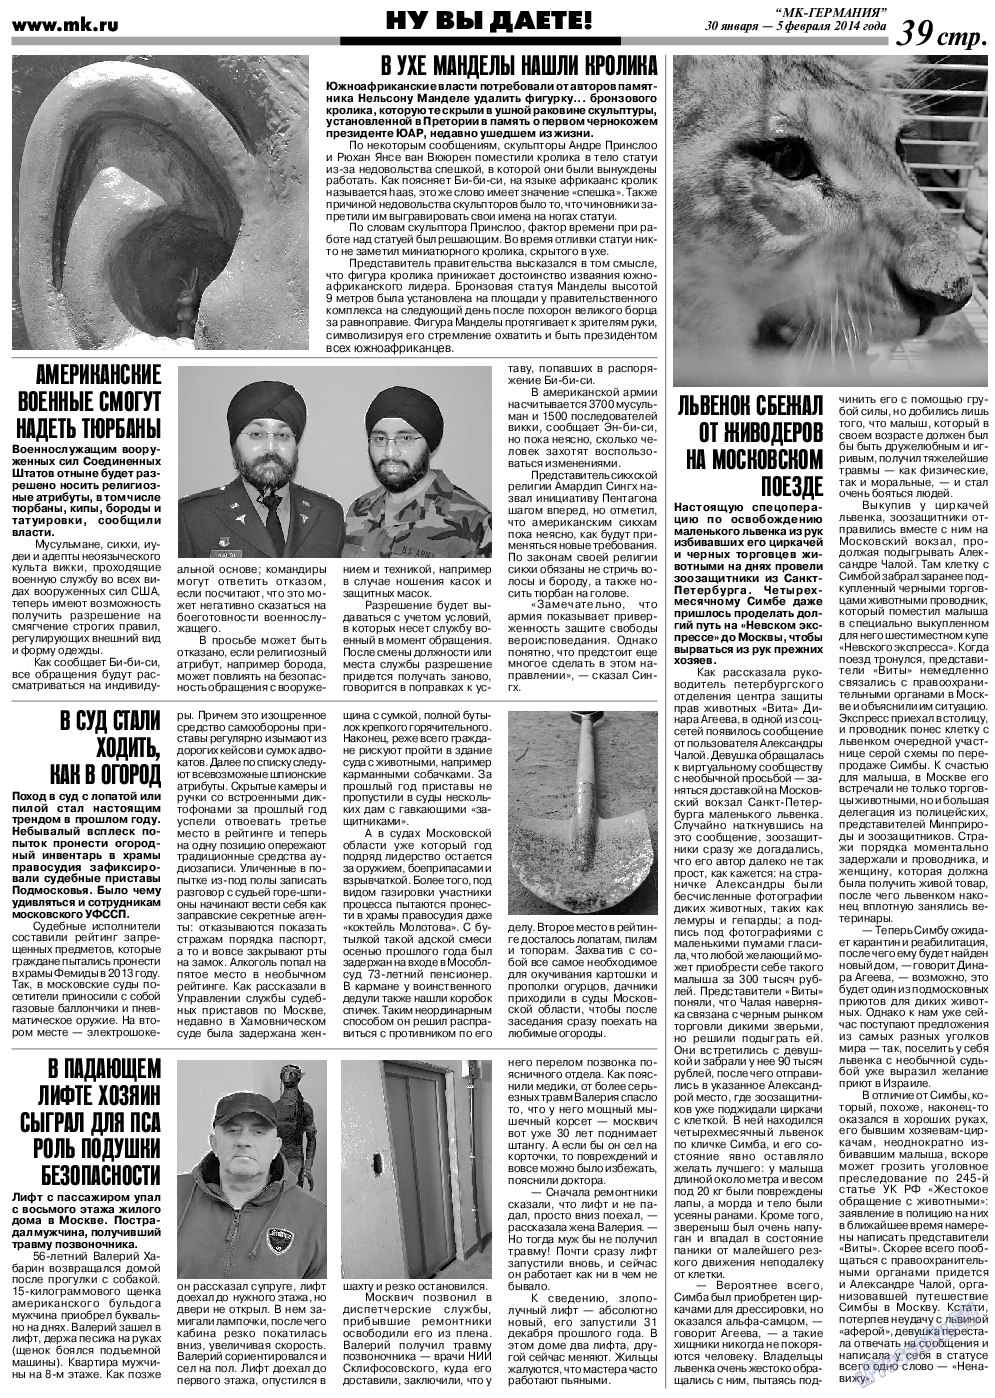 МК-Германия, газета. 2014 №5 стр.39